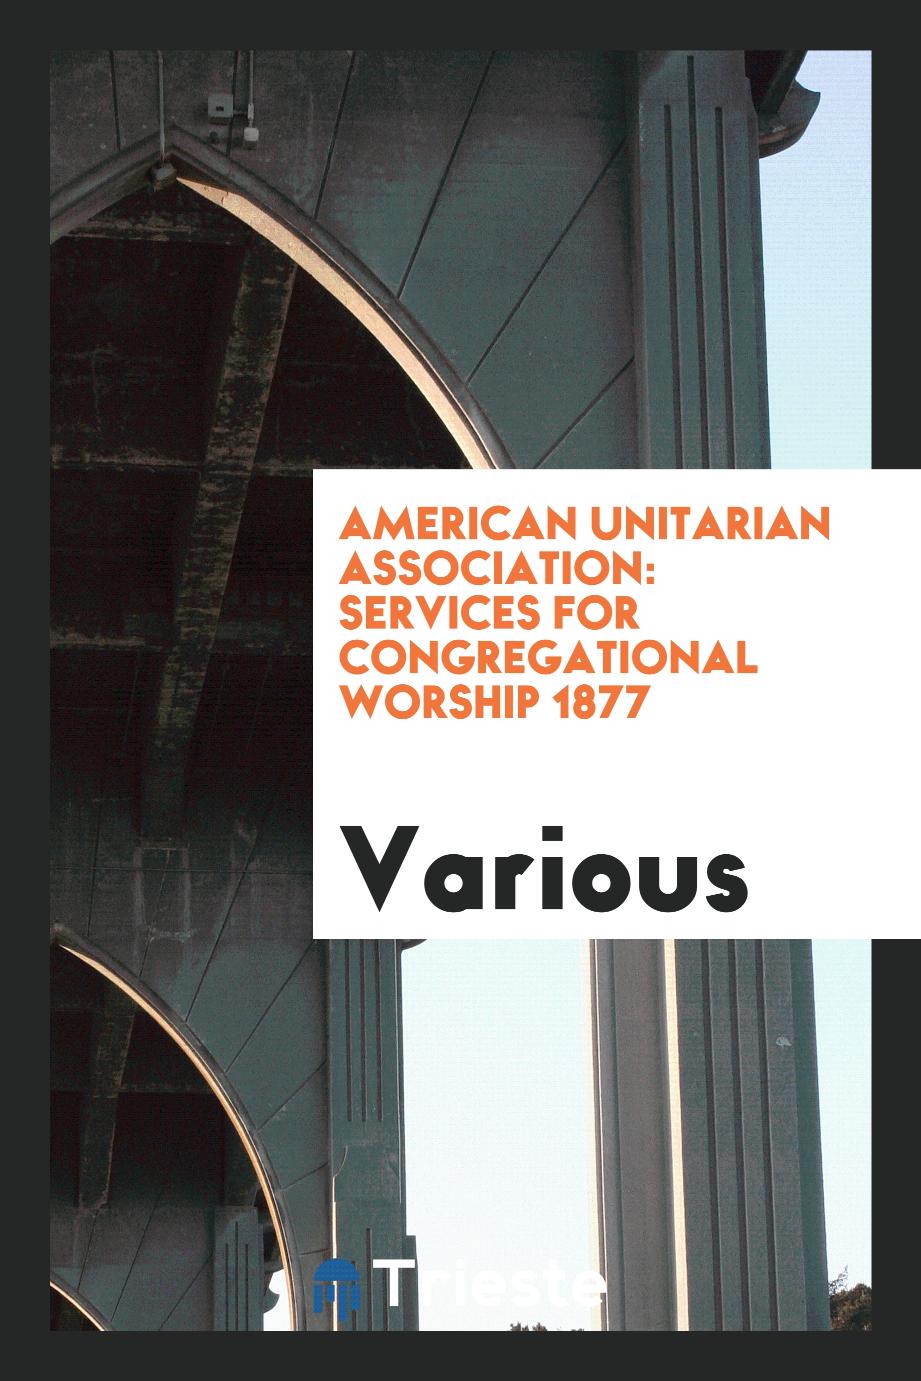 American Unitarian Association: Services for Congregational Worship 1877